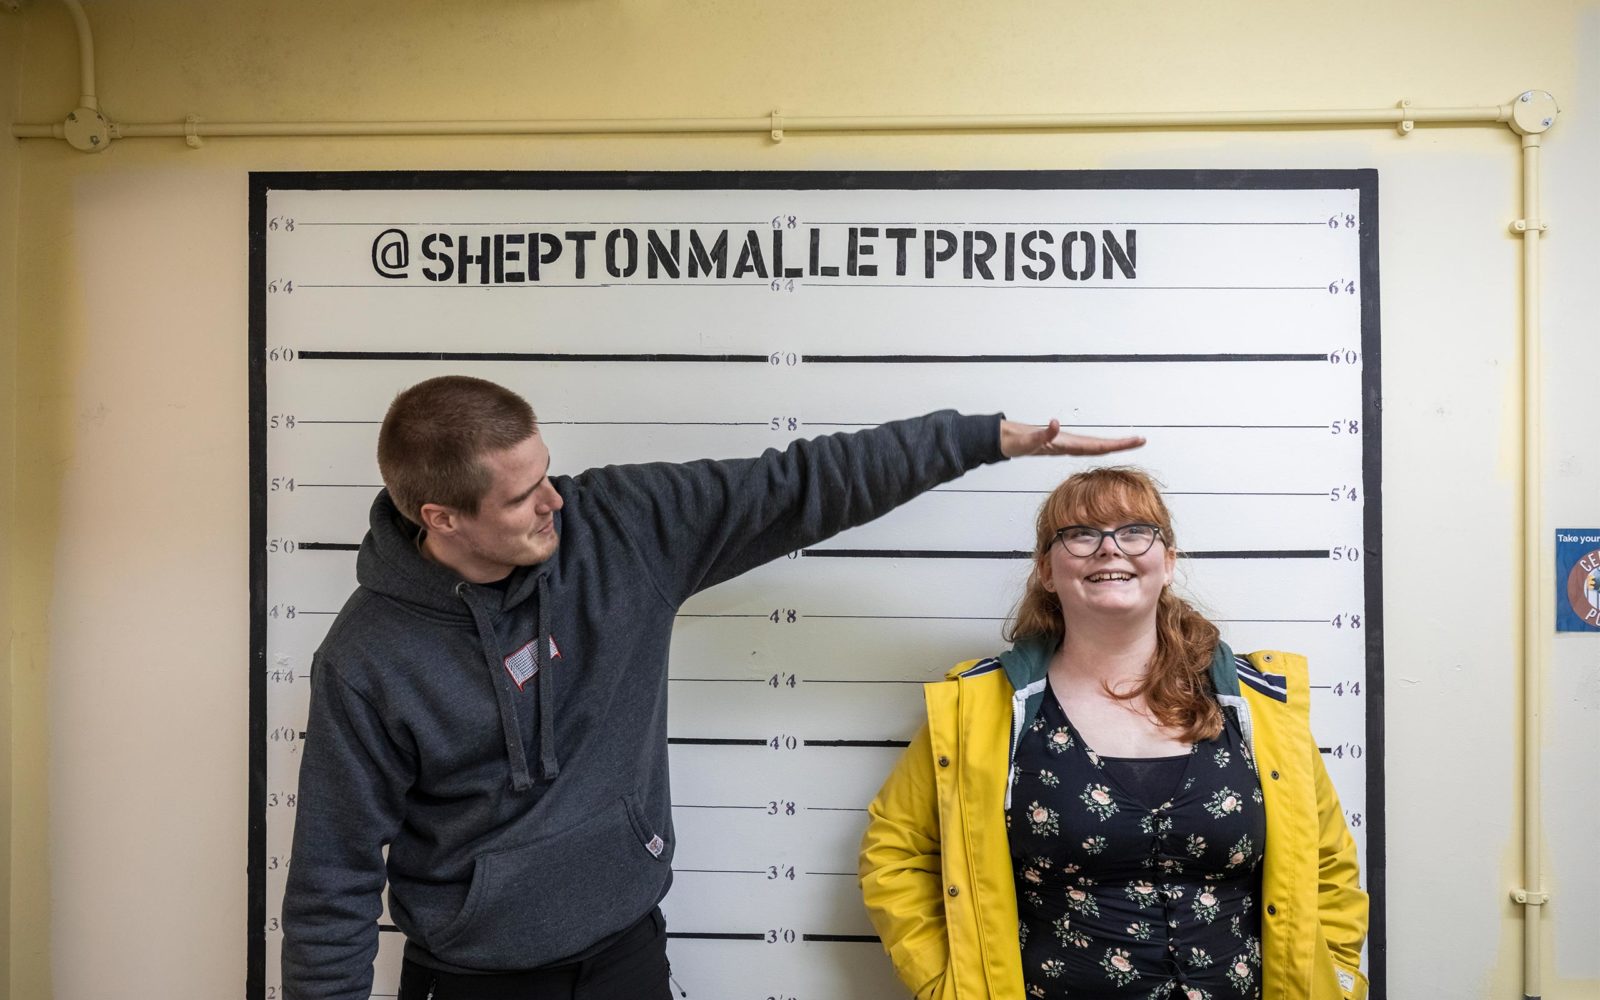 Shepton Mallet Prison Self Guided Tour